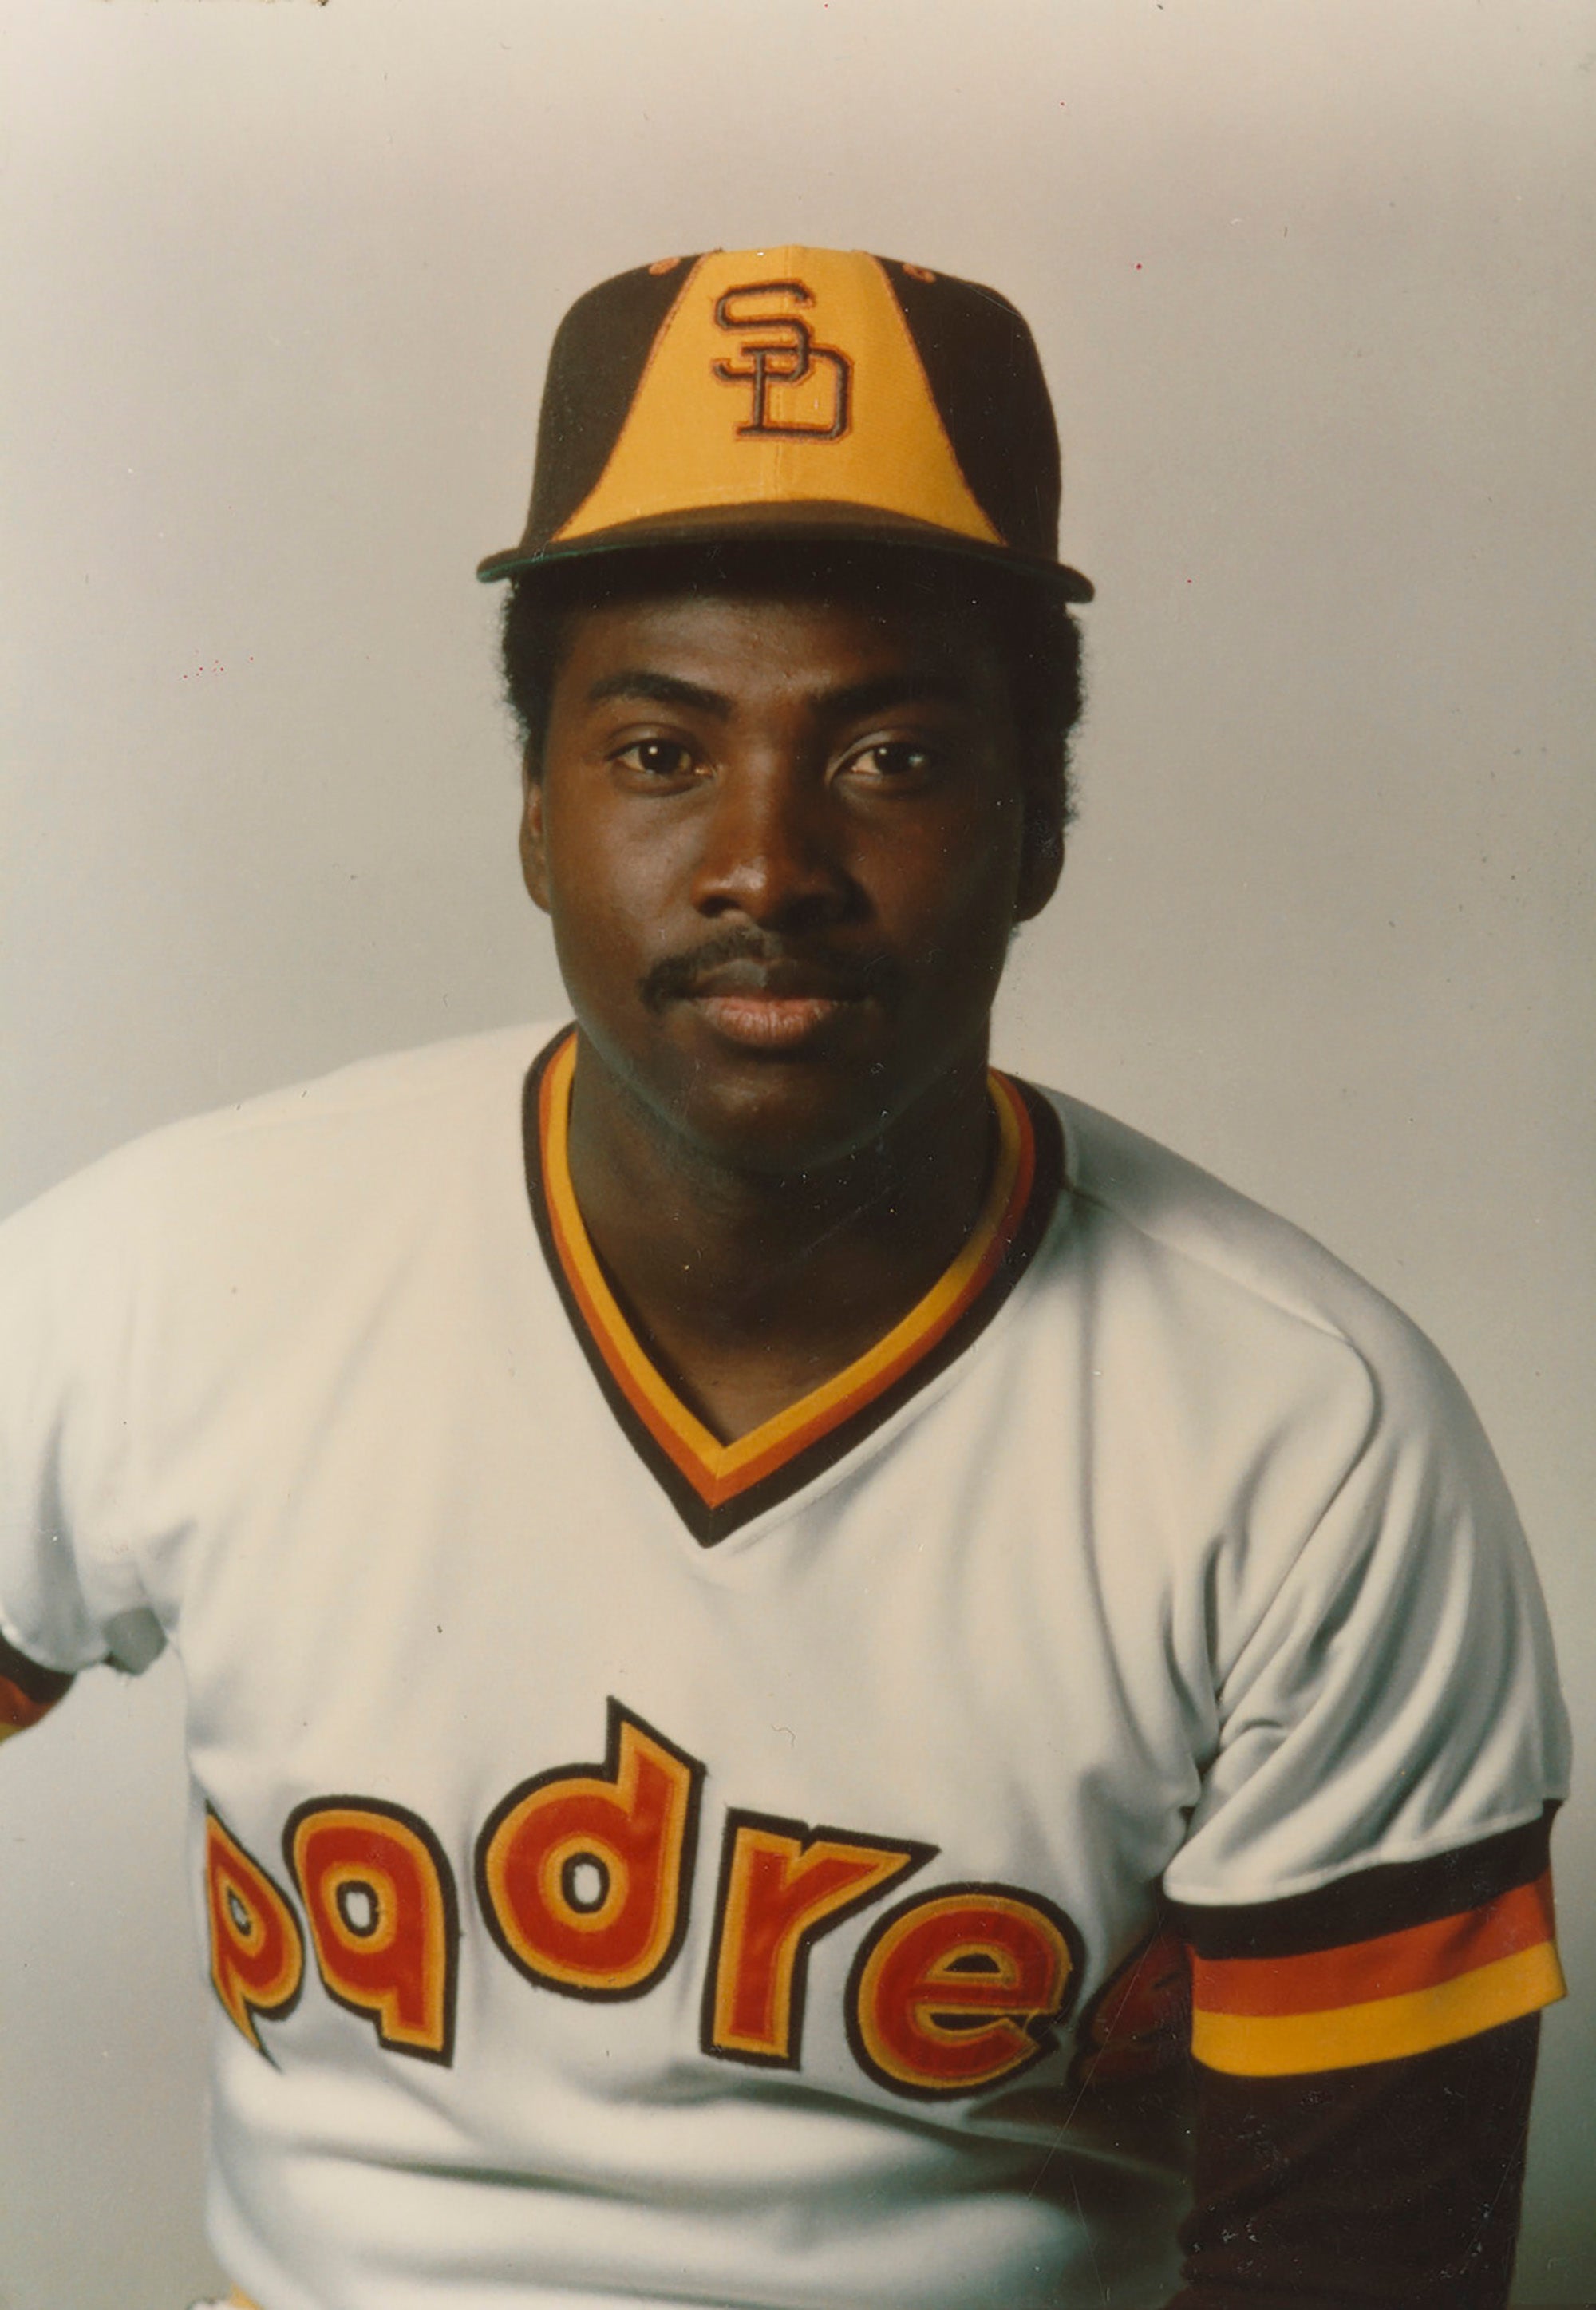 File:Tony Gwynn 1984 jersey.jpg - Wikipedia